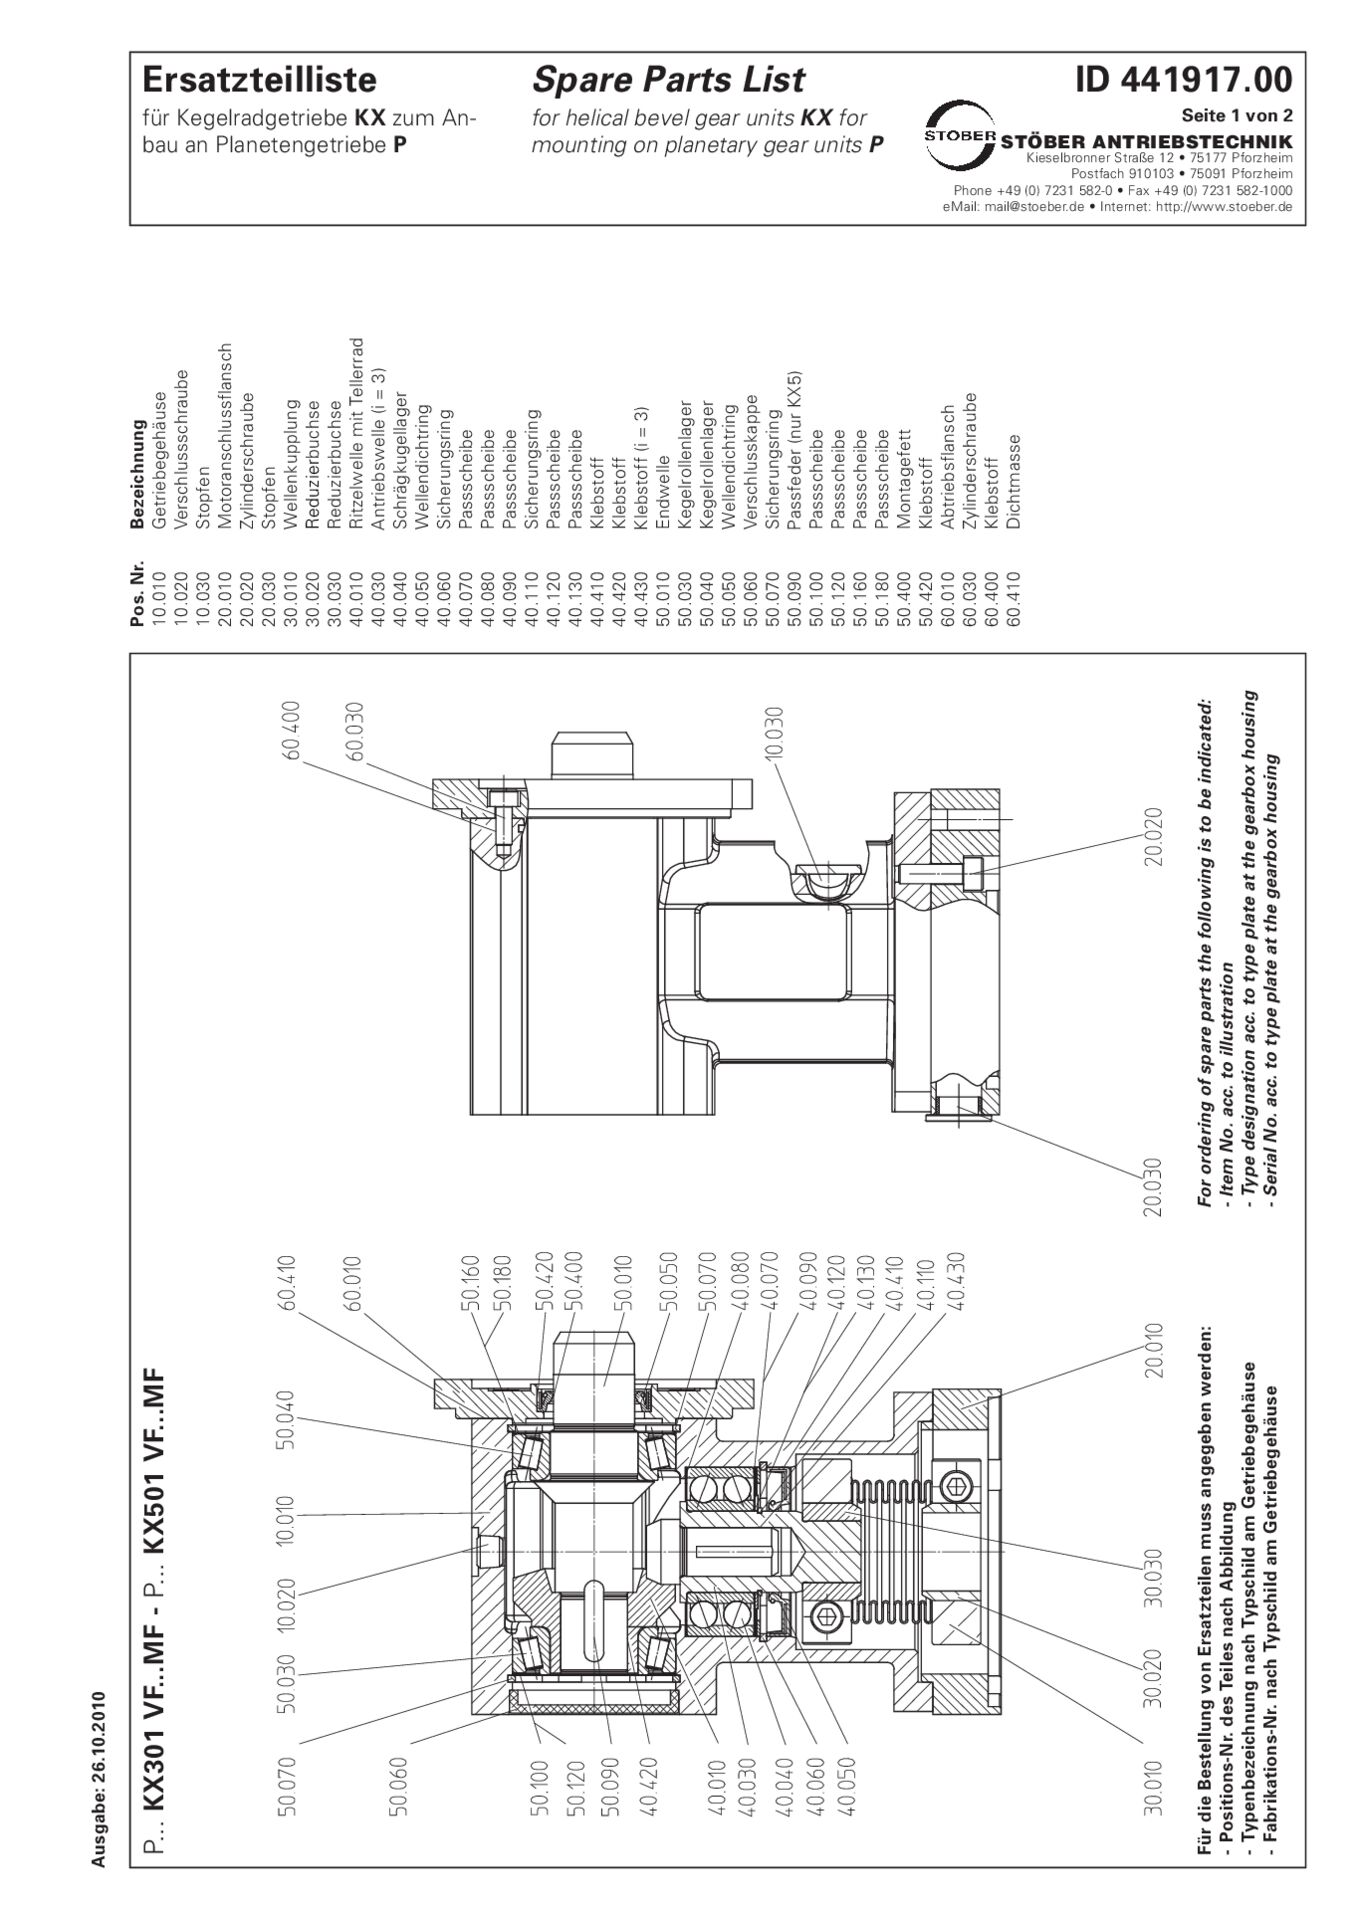 Replacement parts list helical bevel gear units KX301 KX401 VF for mounting on P gear units since 2006Ersatzteilliste Kegelradgetriebe KX301 KX401 VF für den Anbau an P-Getriebe ab 2006